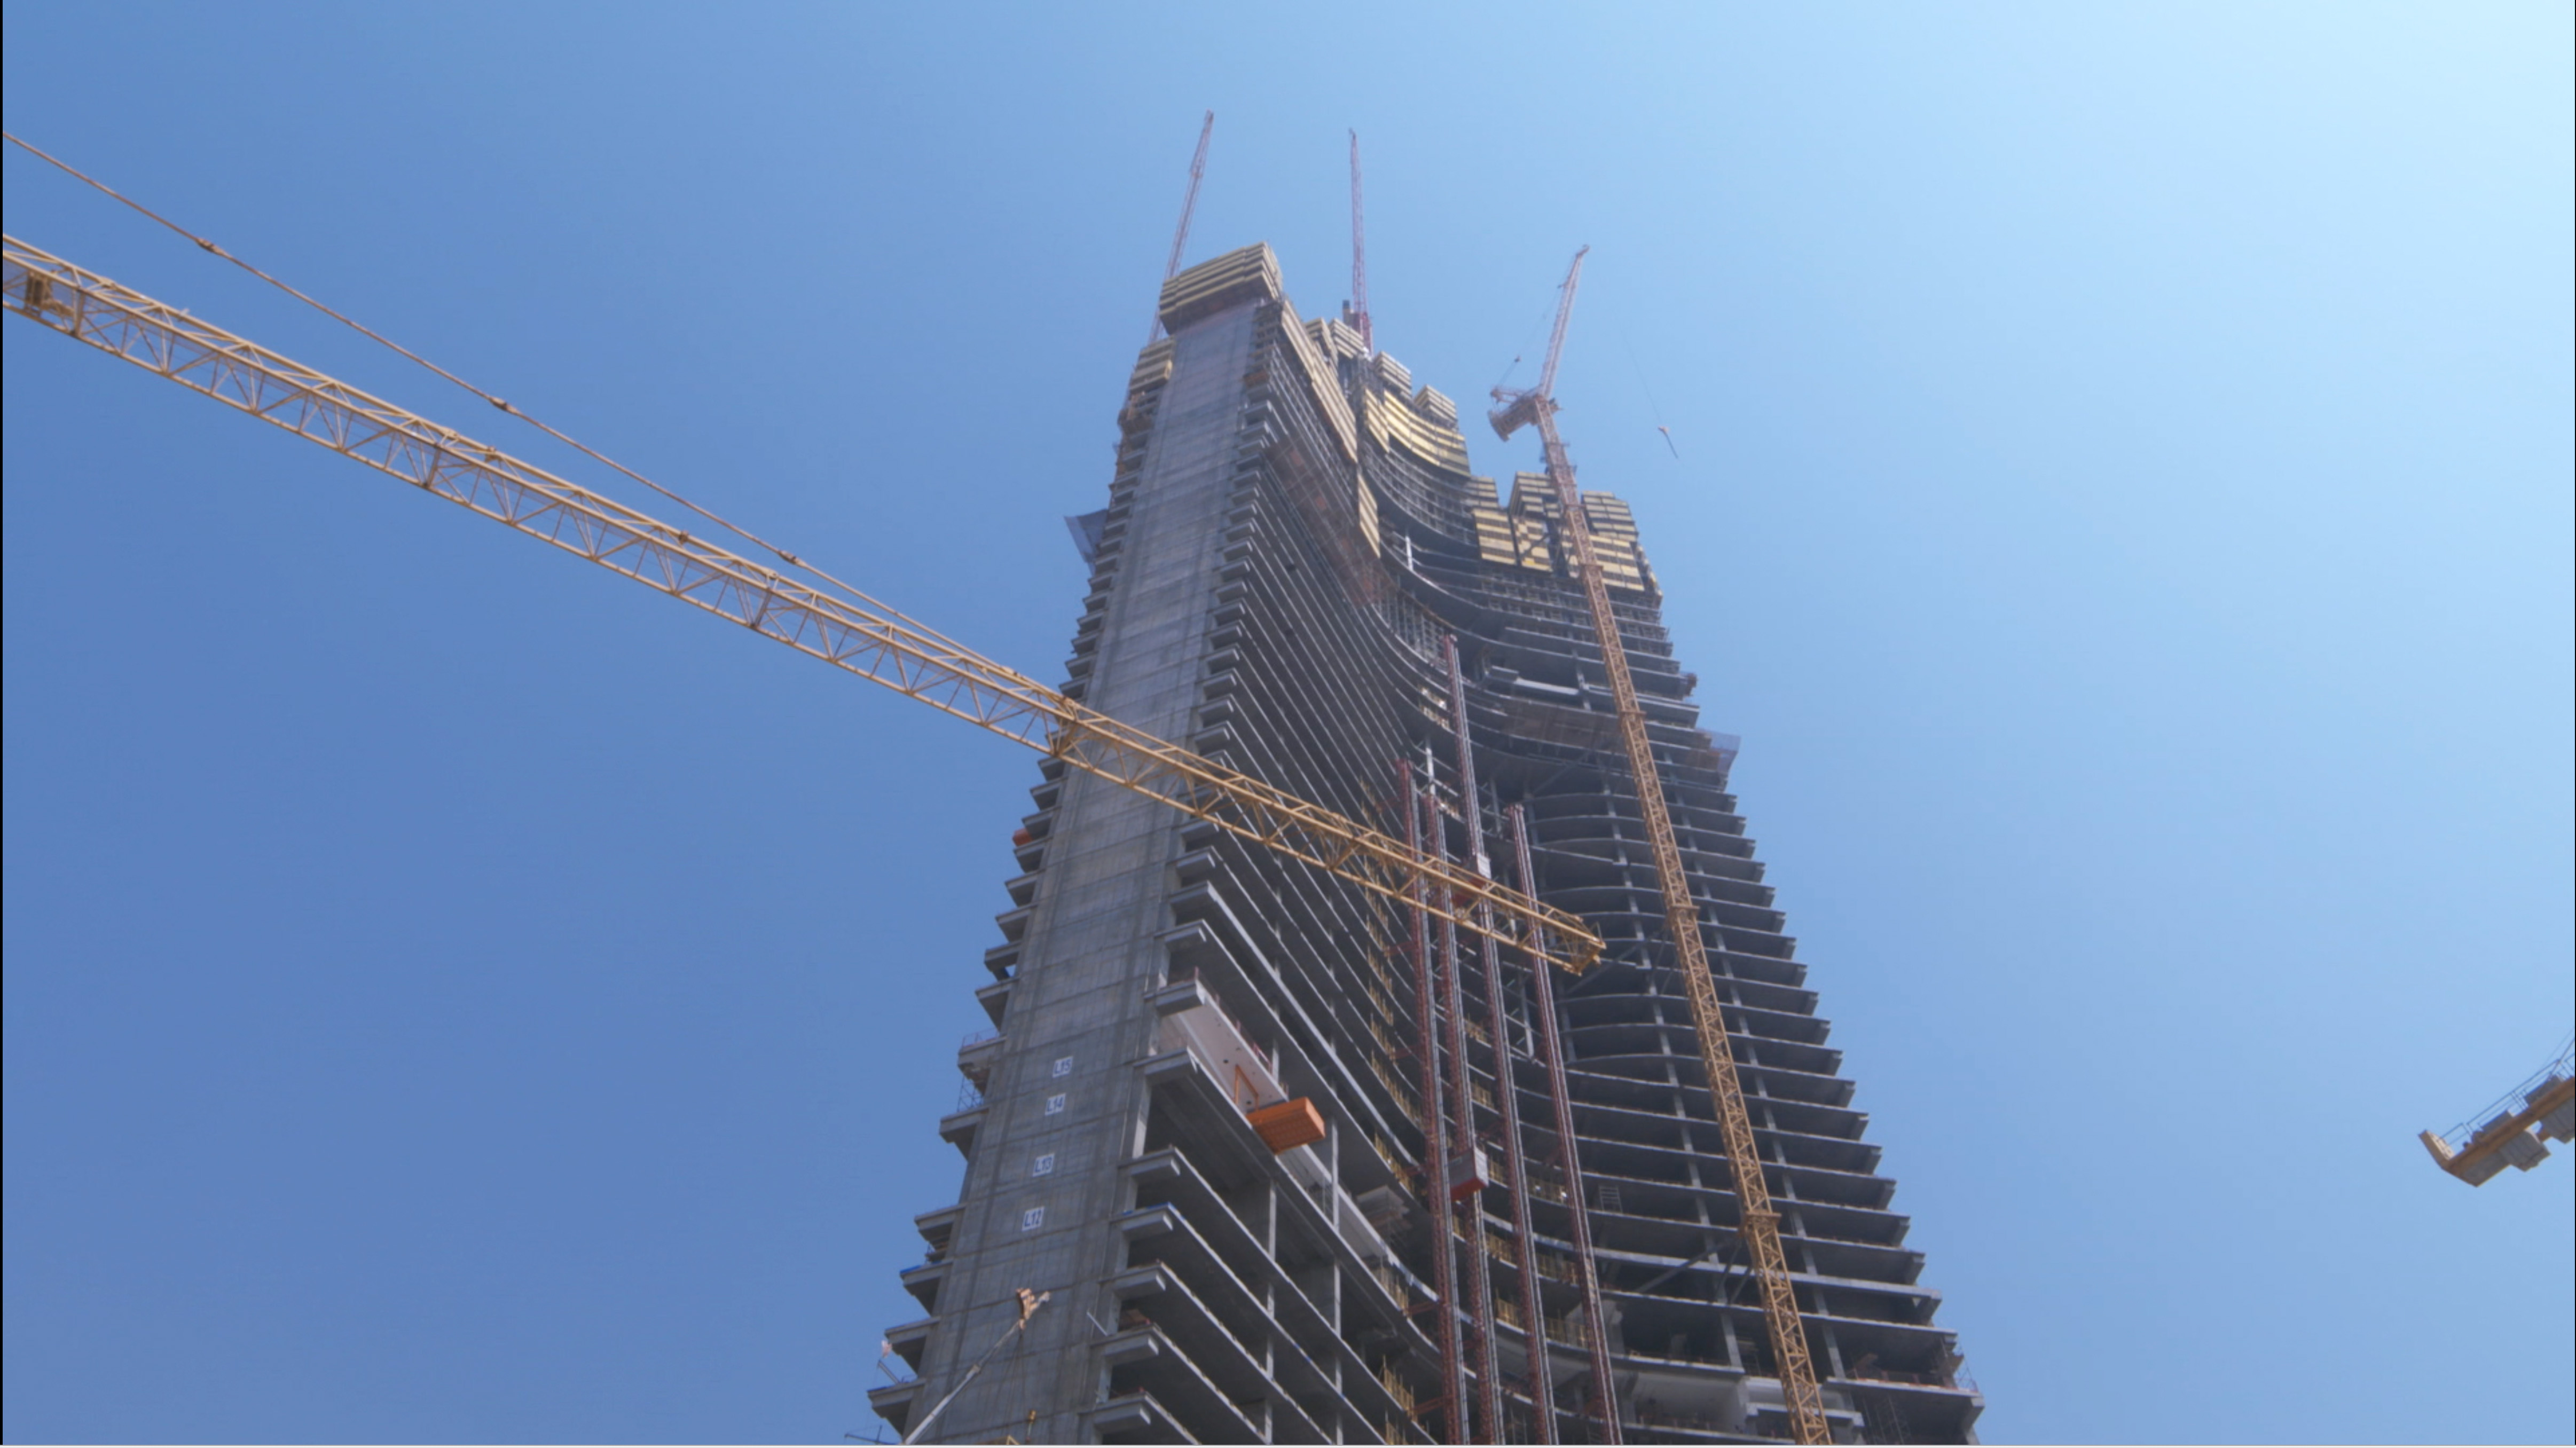 Saudi Arabia to build world's tallest building 1km tall - CNN Style